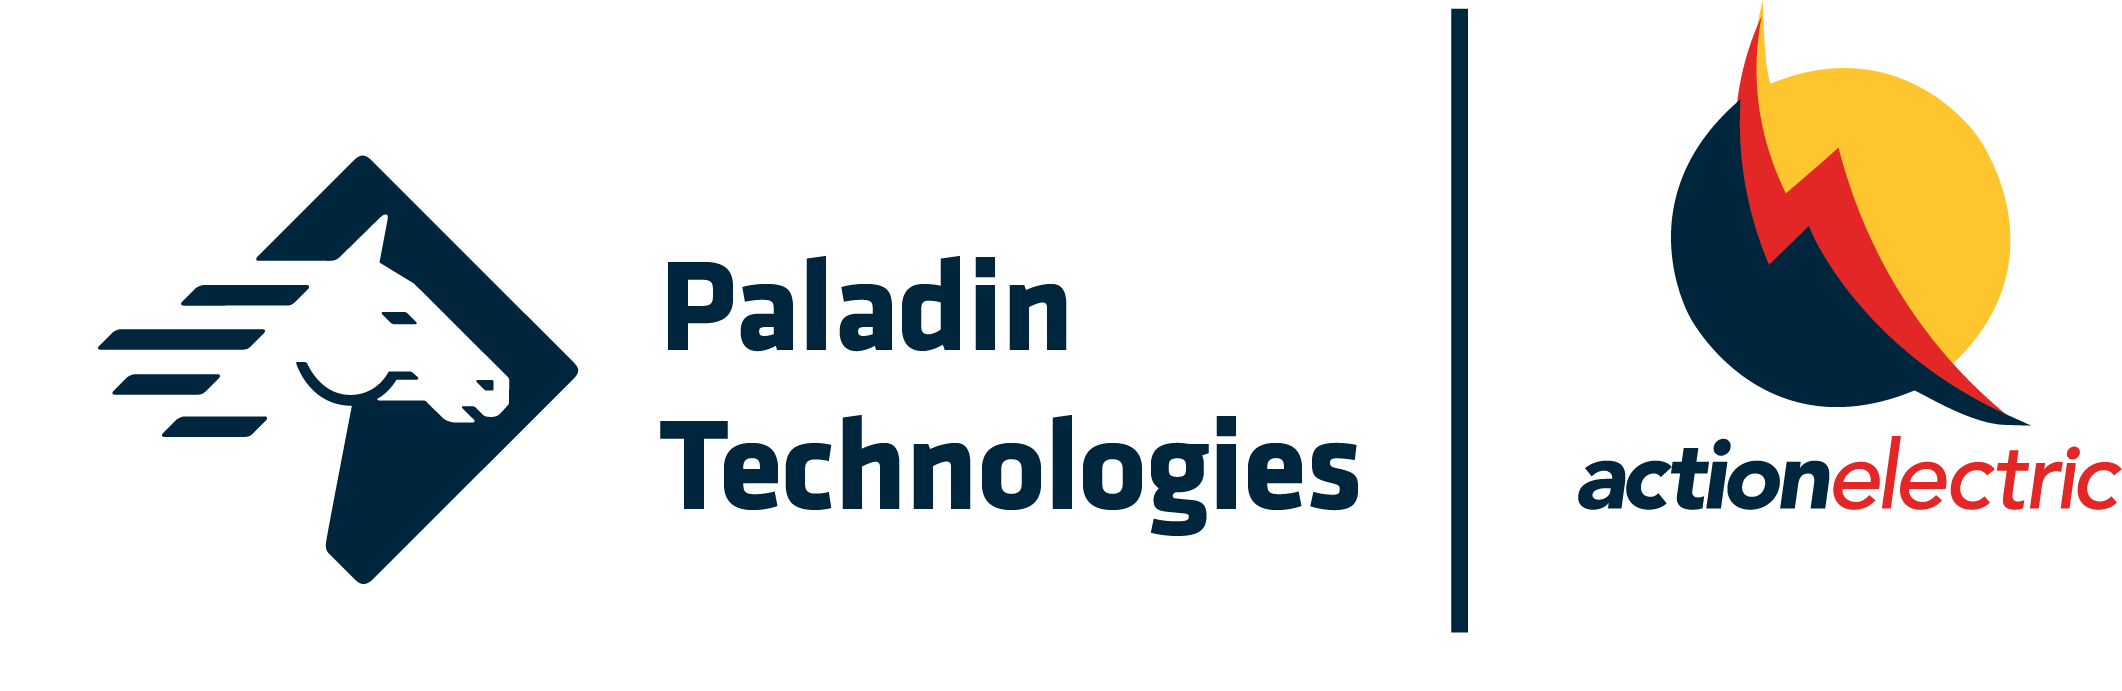 Paladin Technologies x Action Electric logos